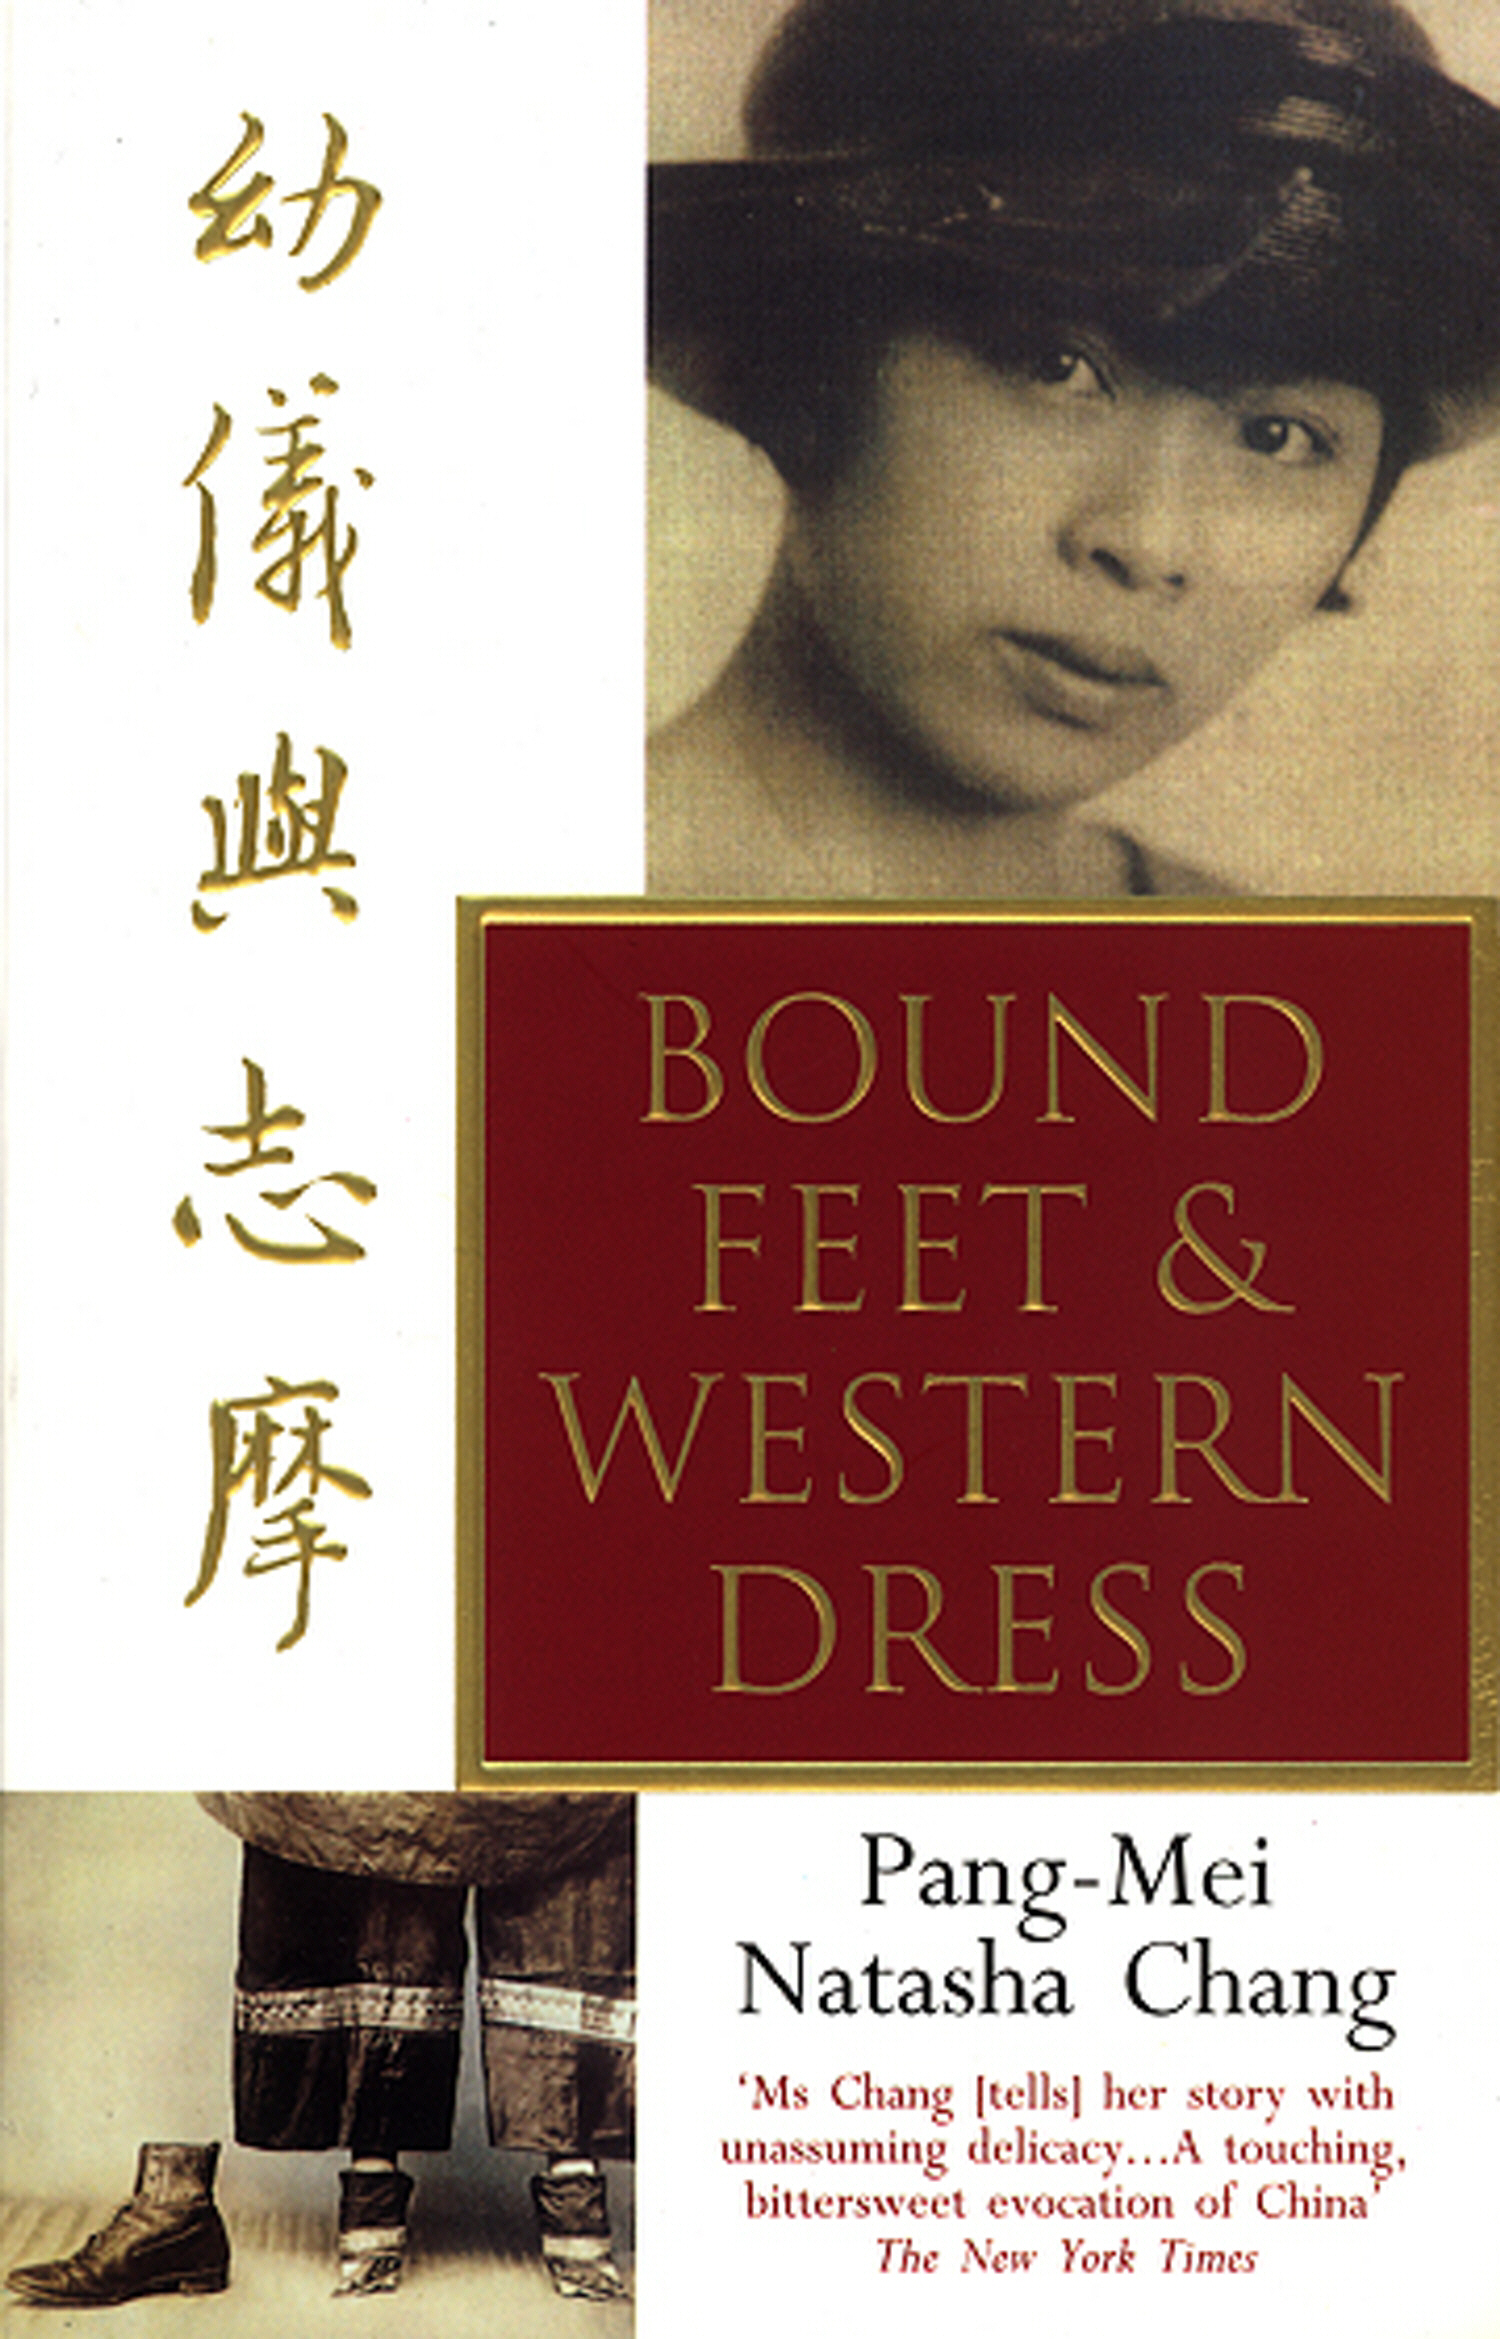 Bound feet & Western Dress by pang-Mei Natasha Chang book. Bound feet & Western Dress by pang-Mei Natasha Chang. The Binding книга на русском. Bound feet. Автор чанг